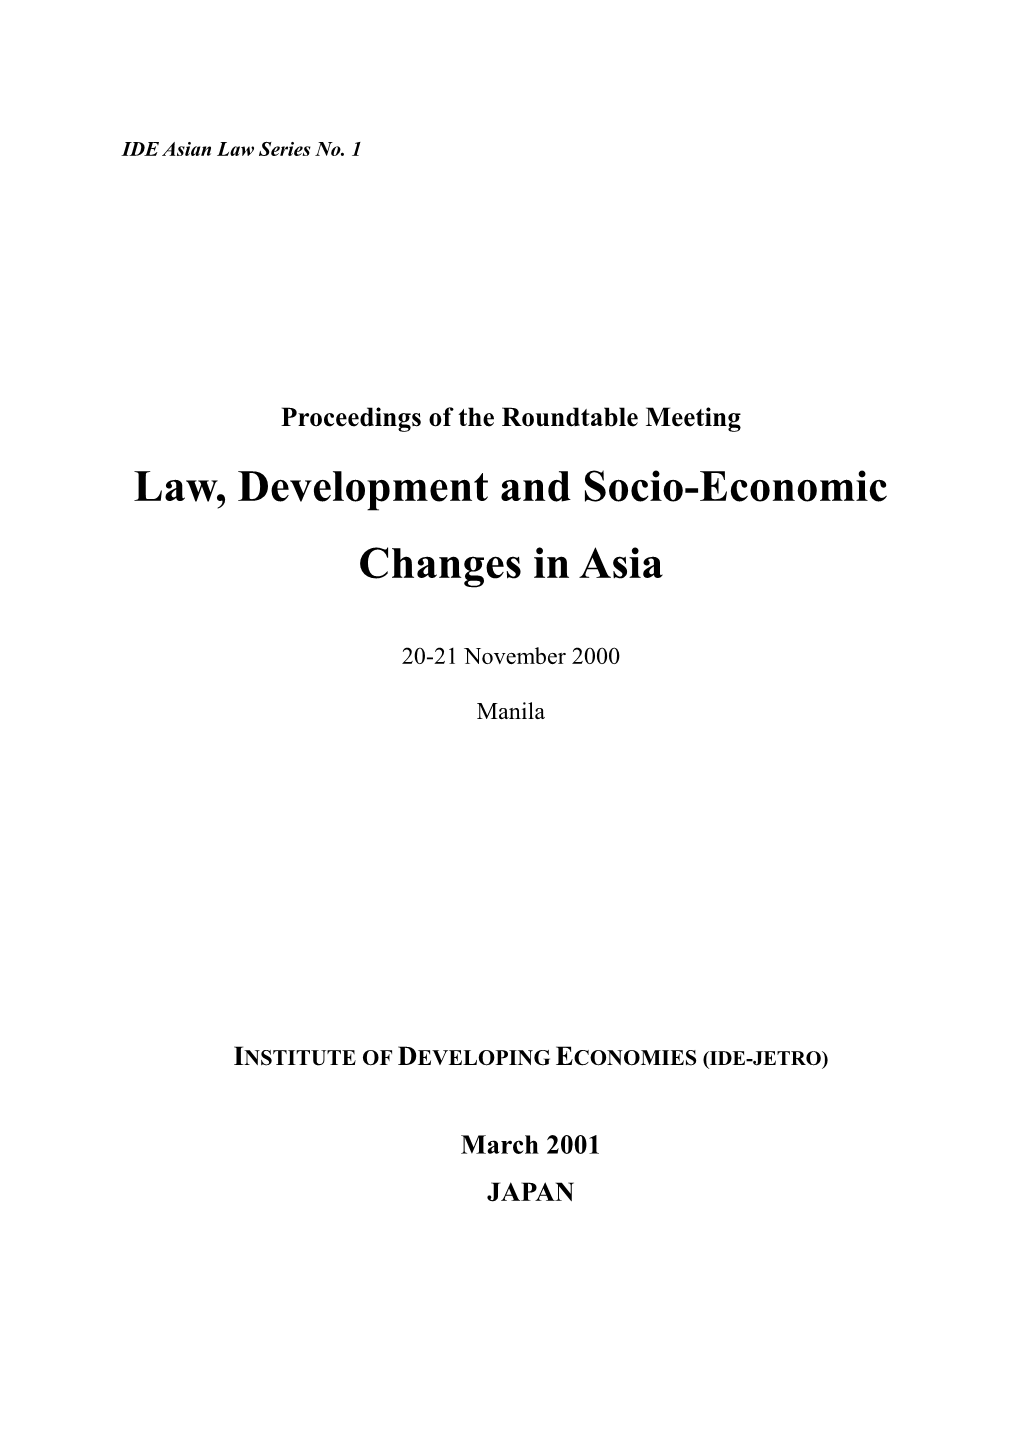 Law, Development and Socio-Economic Changes in Asia